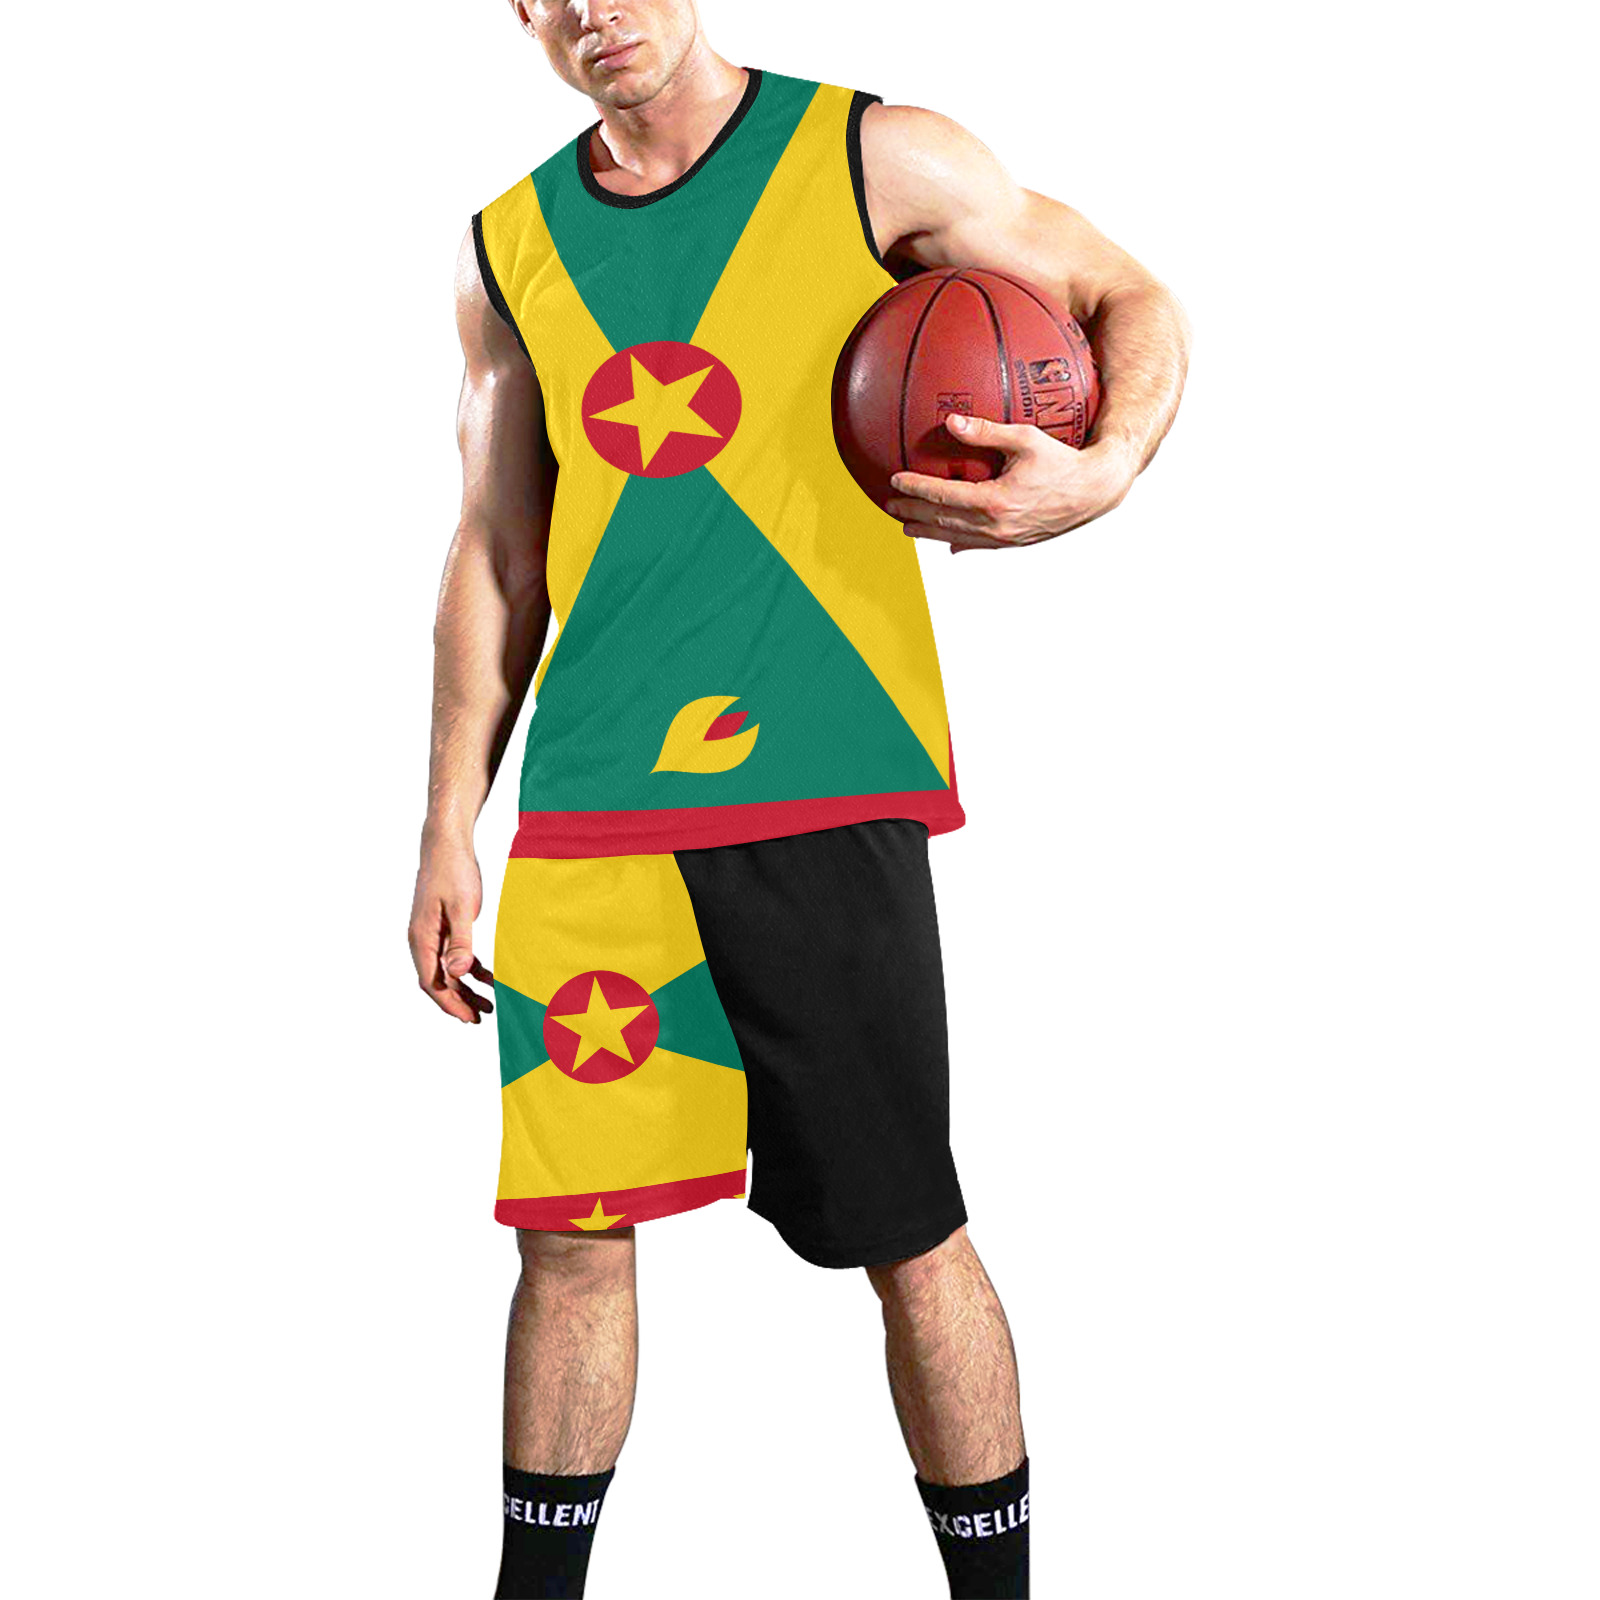 manusartgnd All Over Print Basketball Uniform